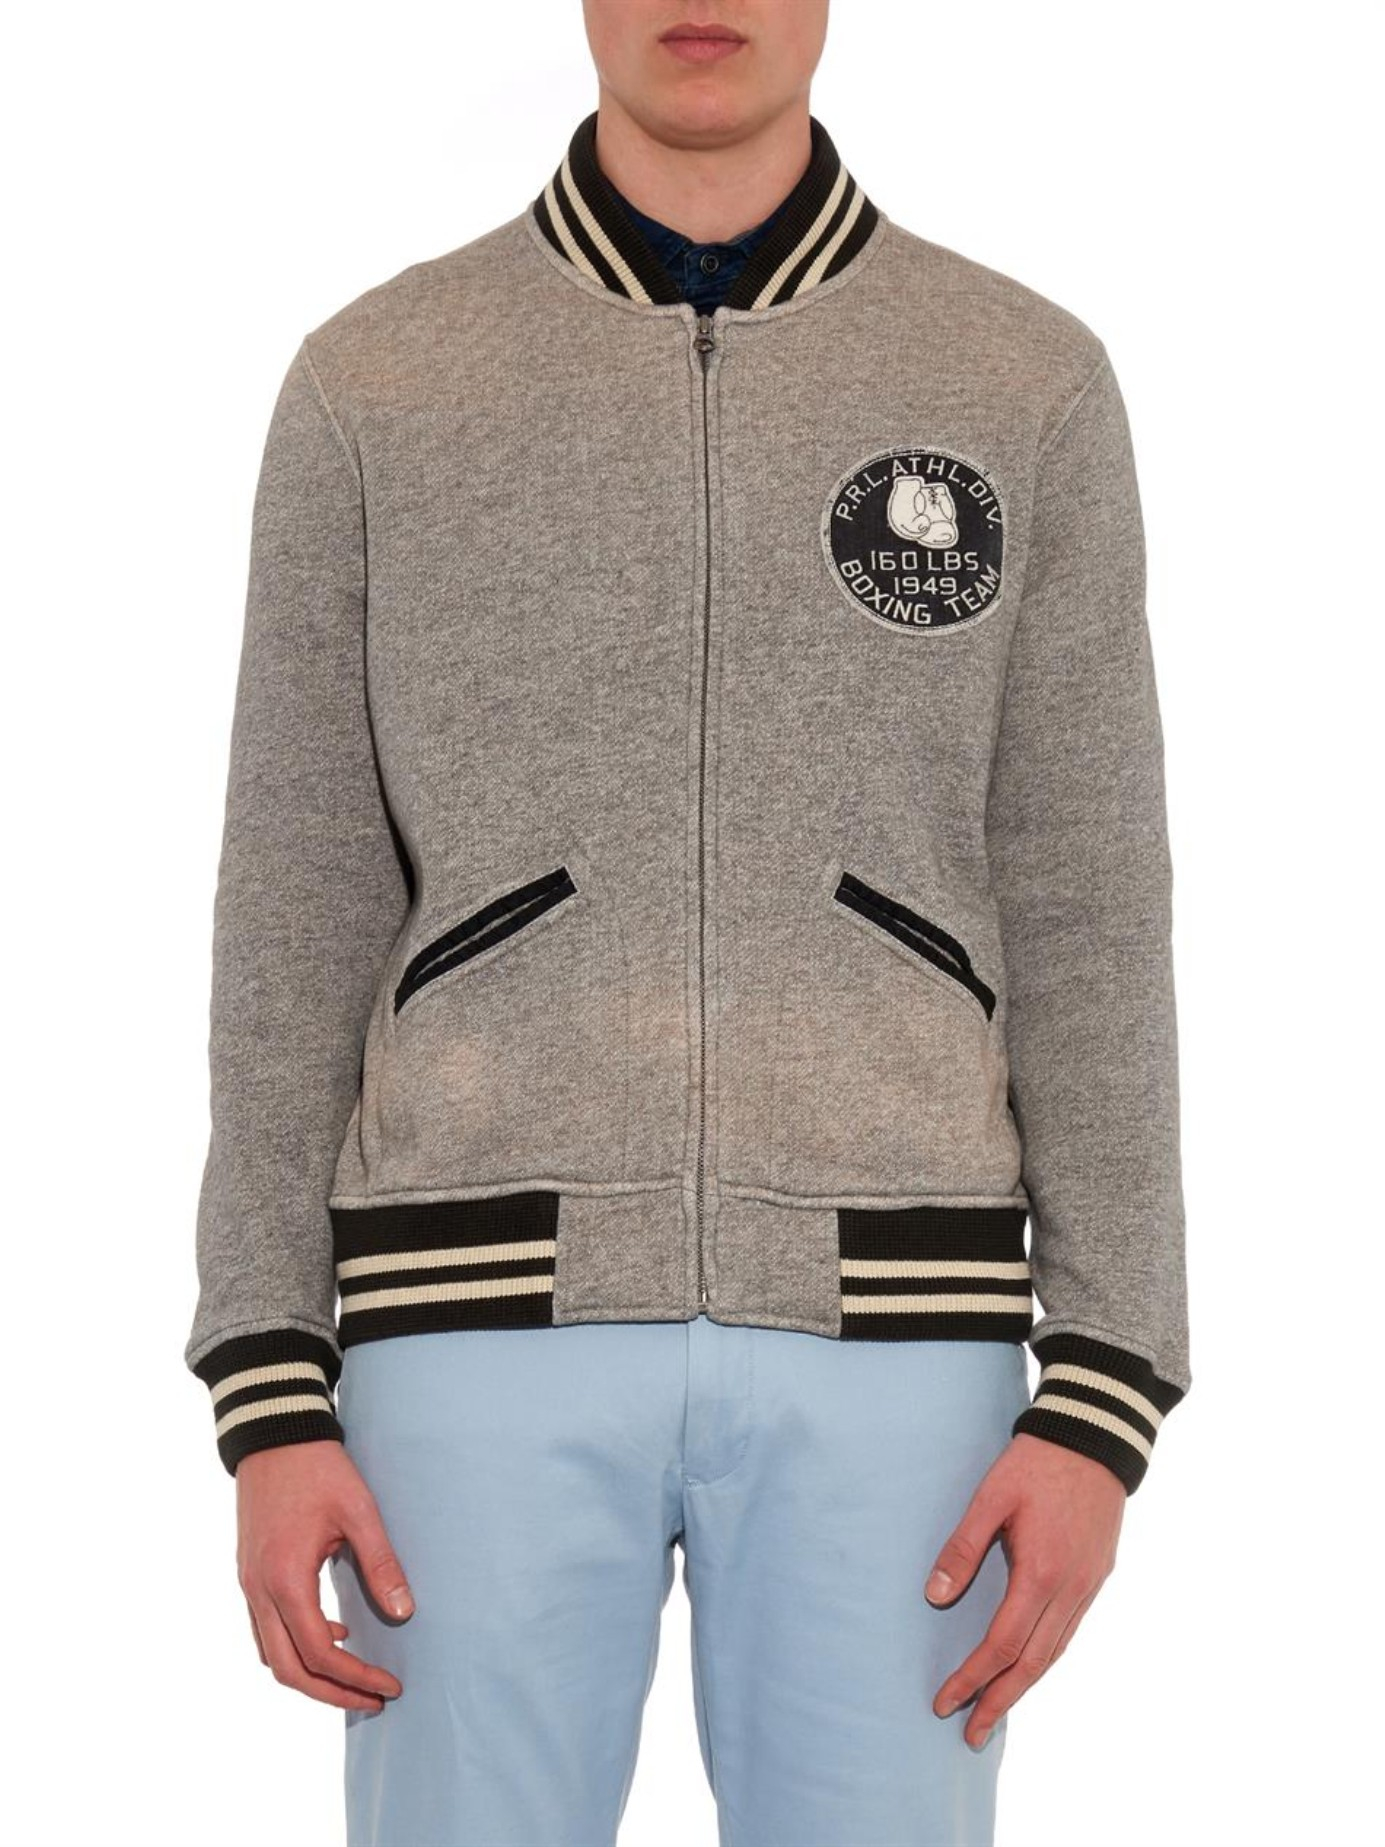 Polo Ralph Lauren New York Varsity Jacket in Grey for Men - Lyst